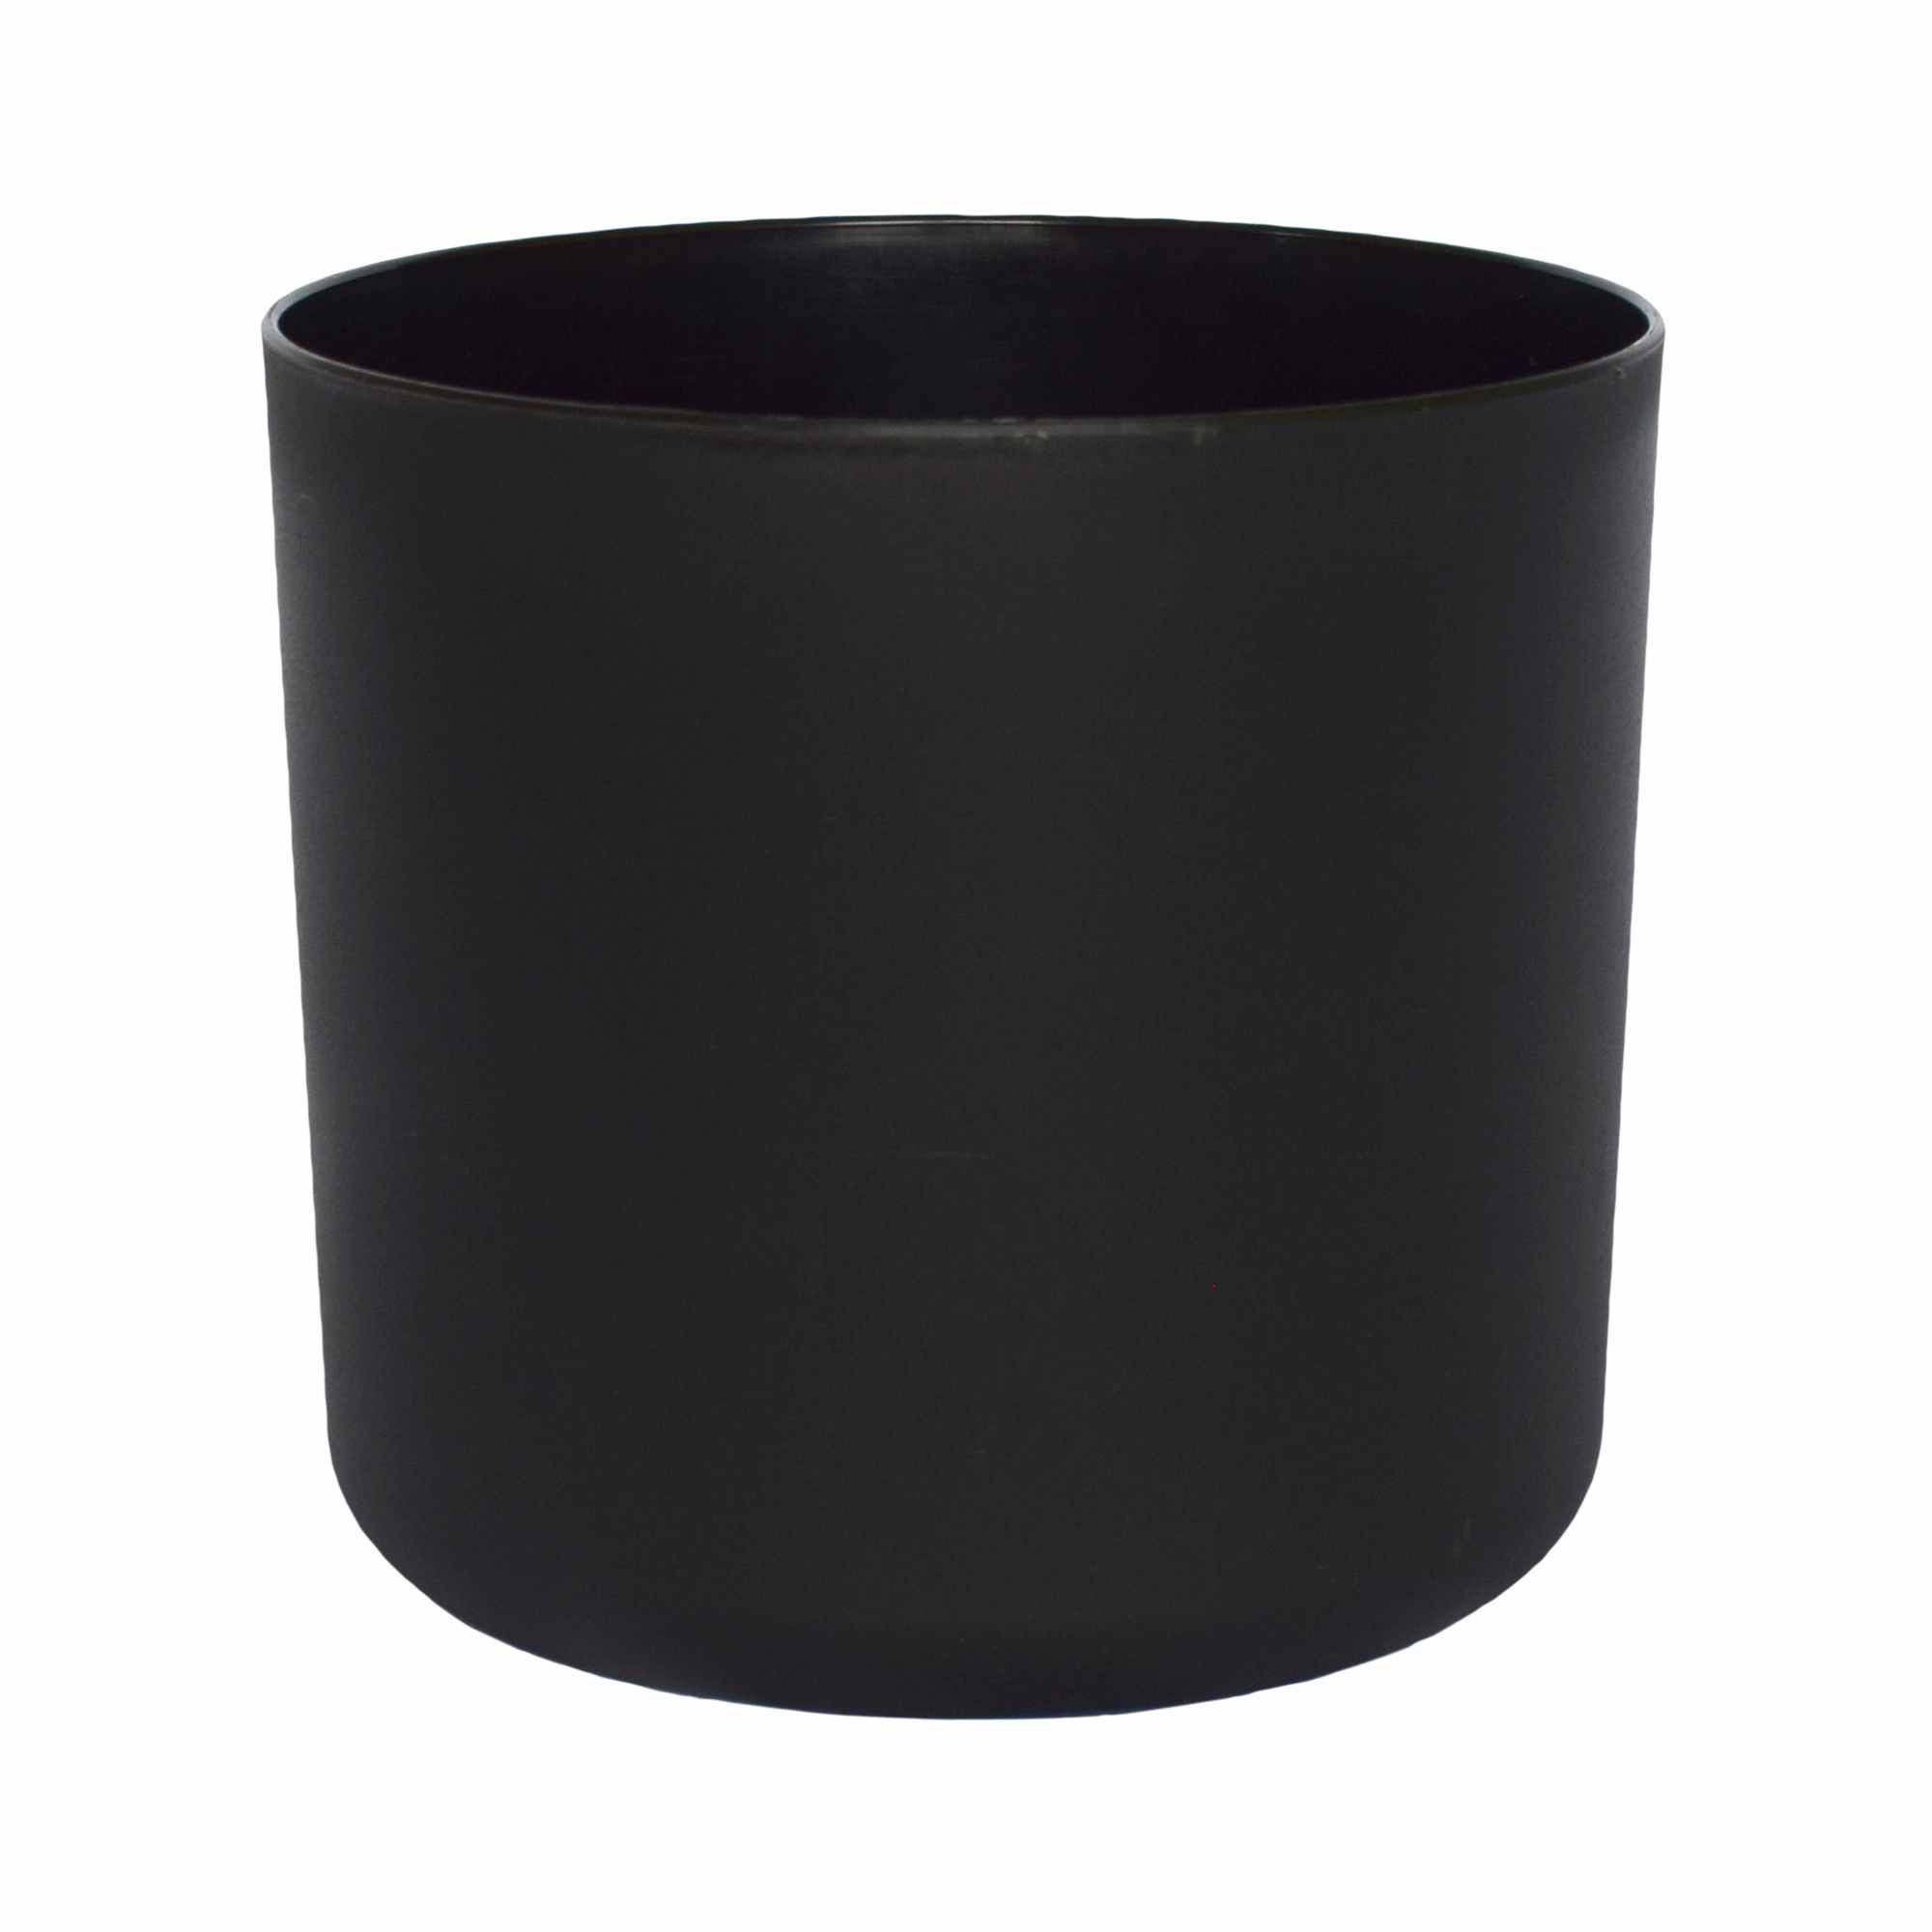 Black Plastic Circular Plant Pot Dia 13 5cm~3663602441731 02c Bq?$MOB PREV$&$width=768&$height=768